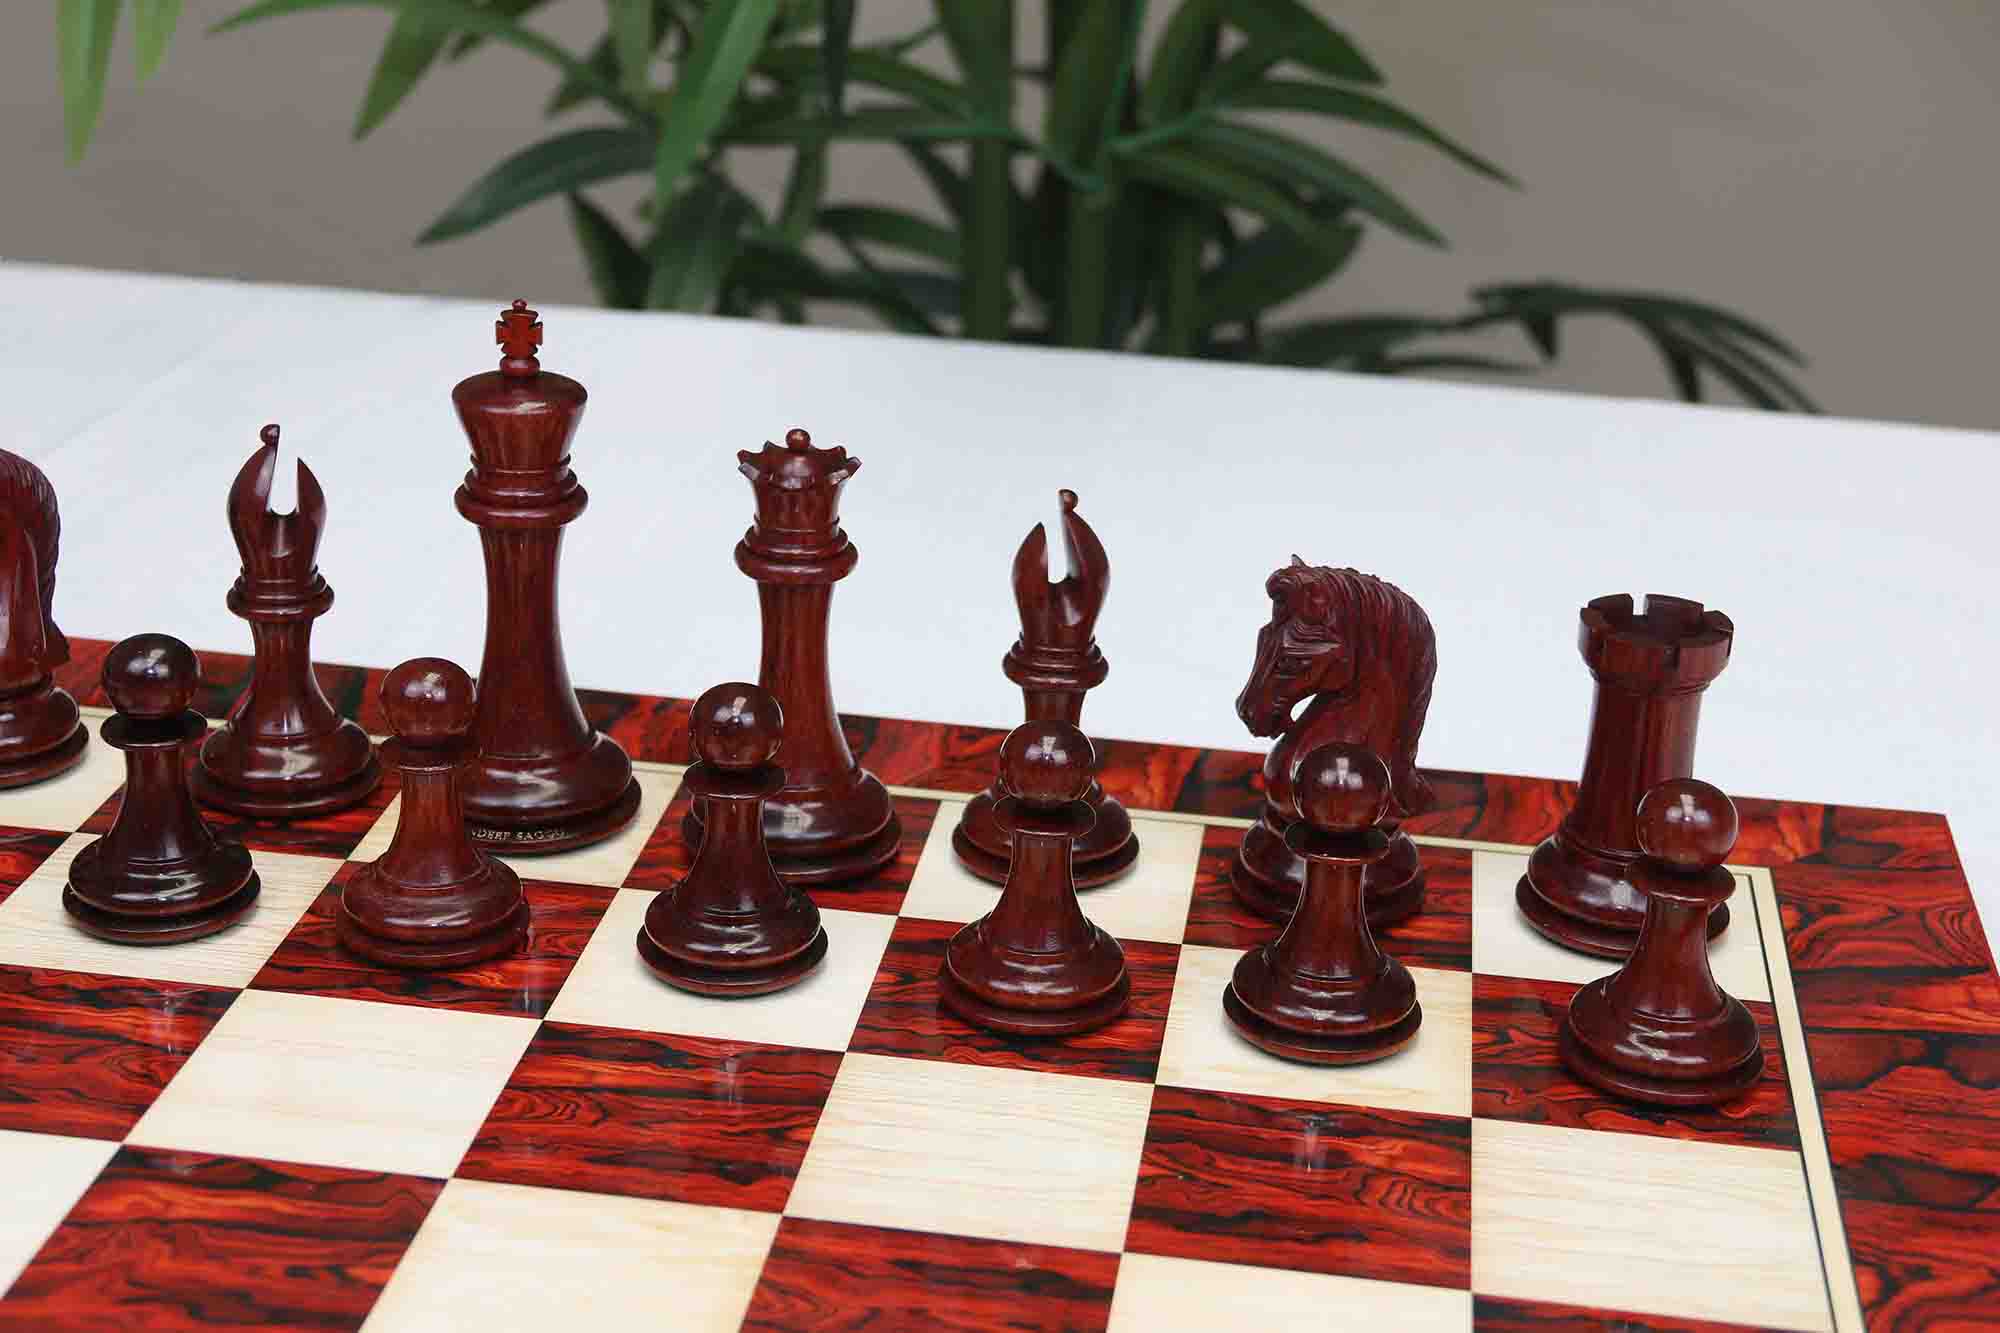 The Kings Crown Series Chess Pieces , Boxwood & Padauk , 4.25 King